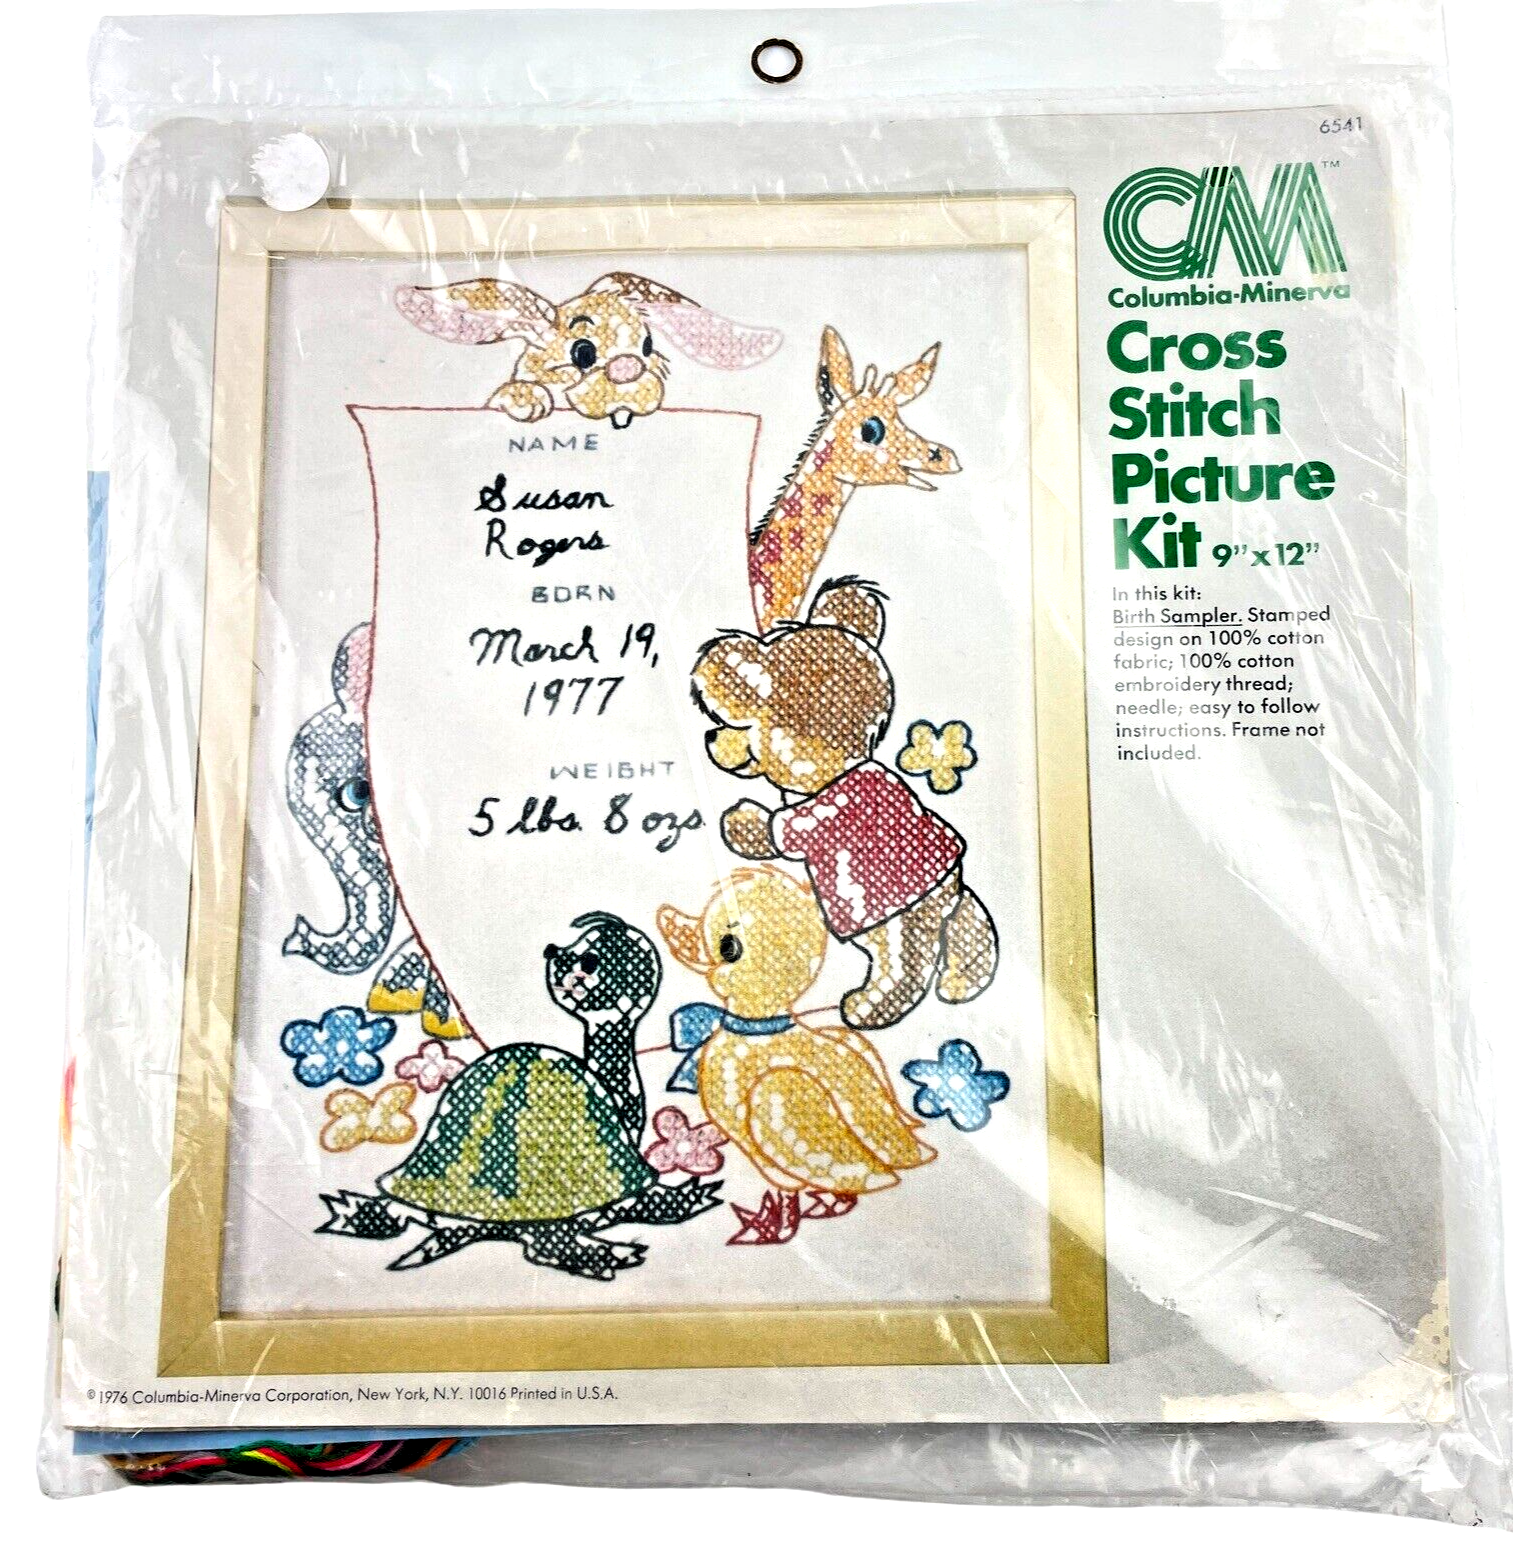 Columbia-Minerva Stamped Birth Sampler Cross Stitch Kit  Giraffe Bunny 9x12 in. - $19.22